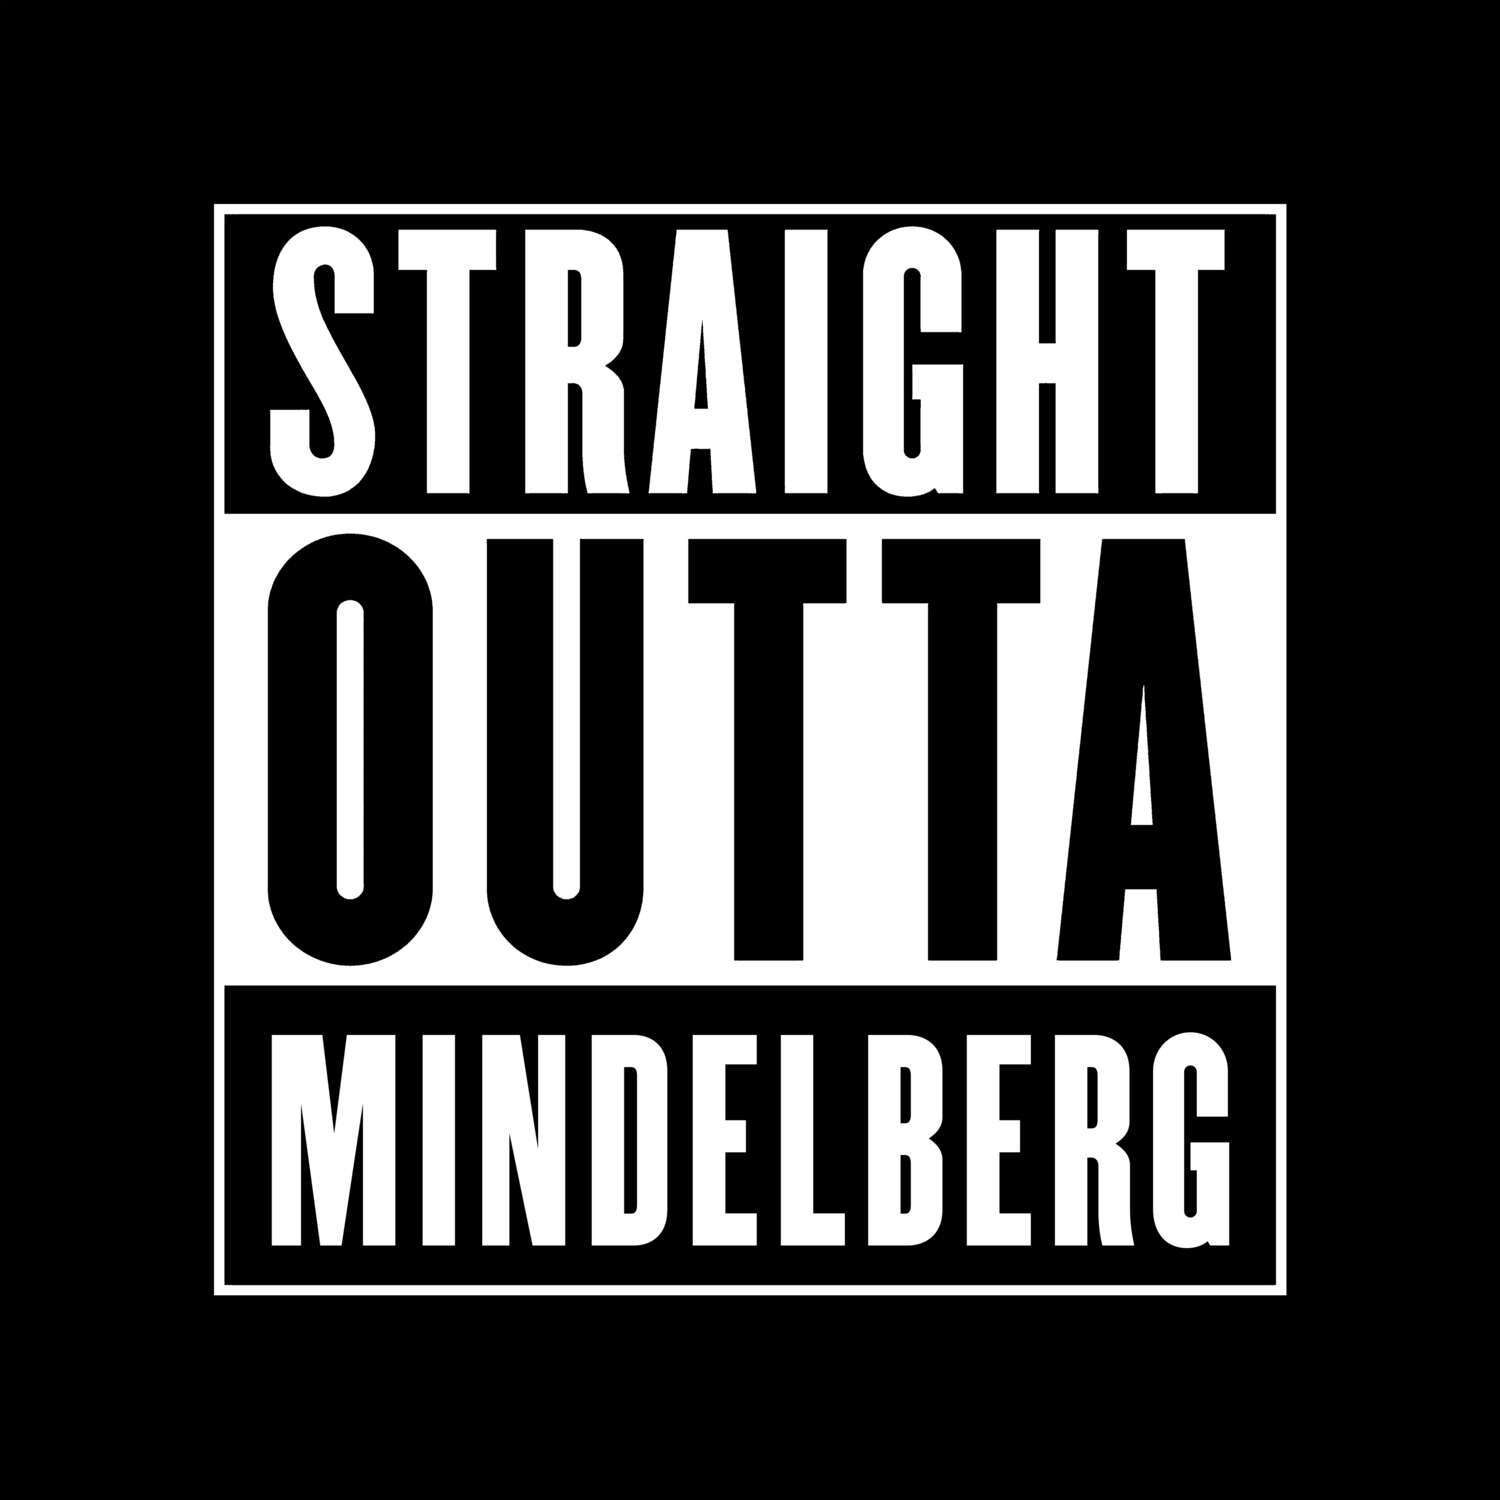 Mindelberg T-Shirt »Straight Outta«